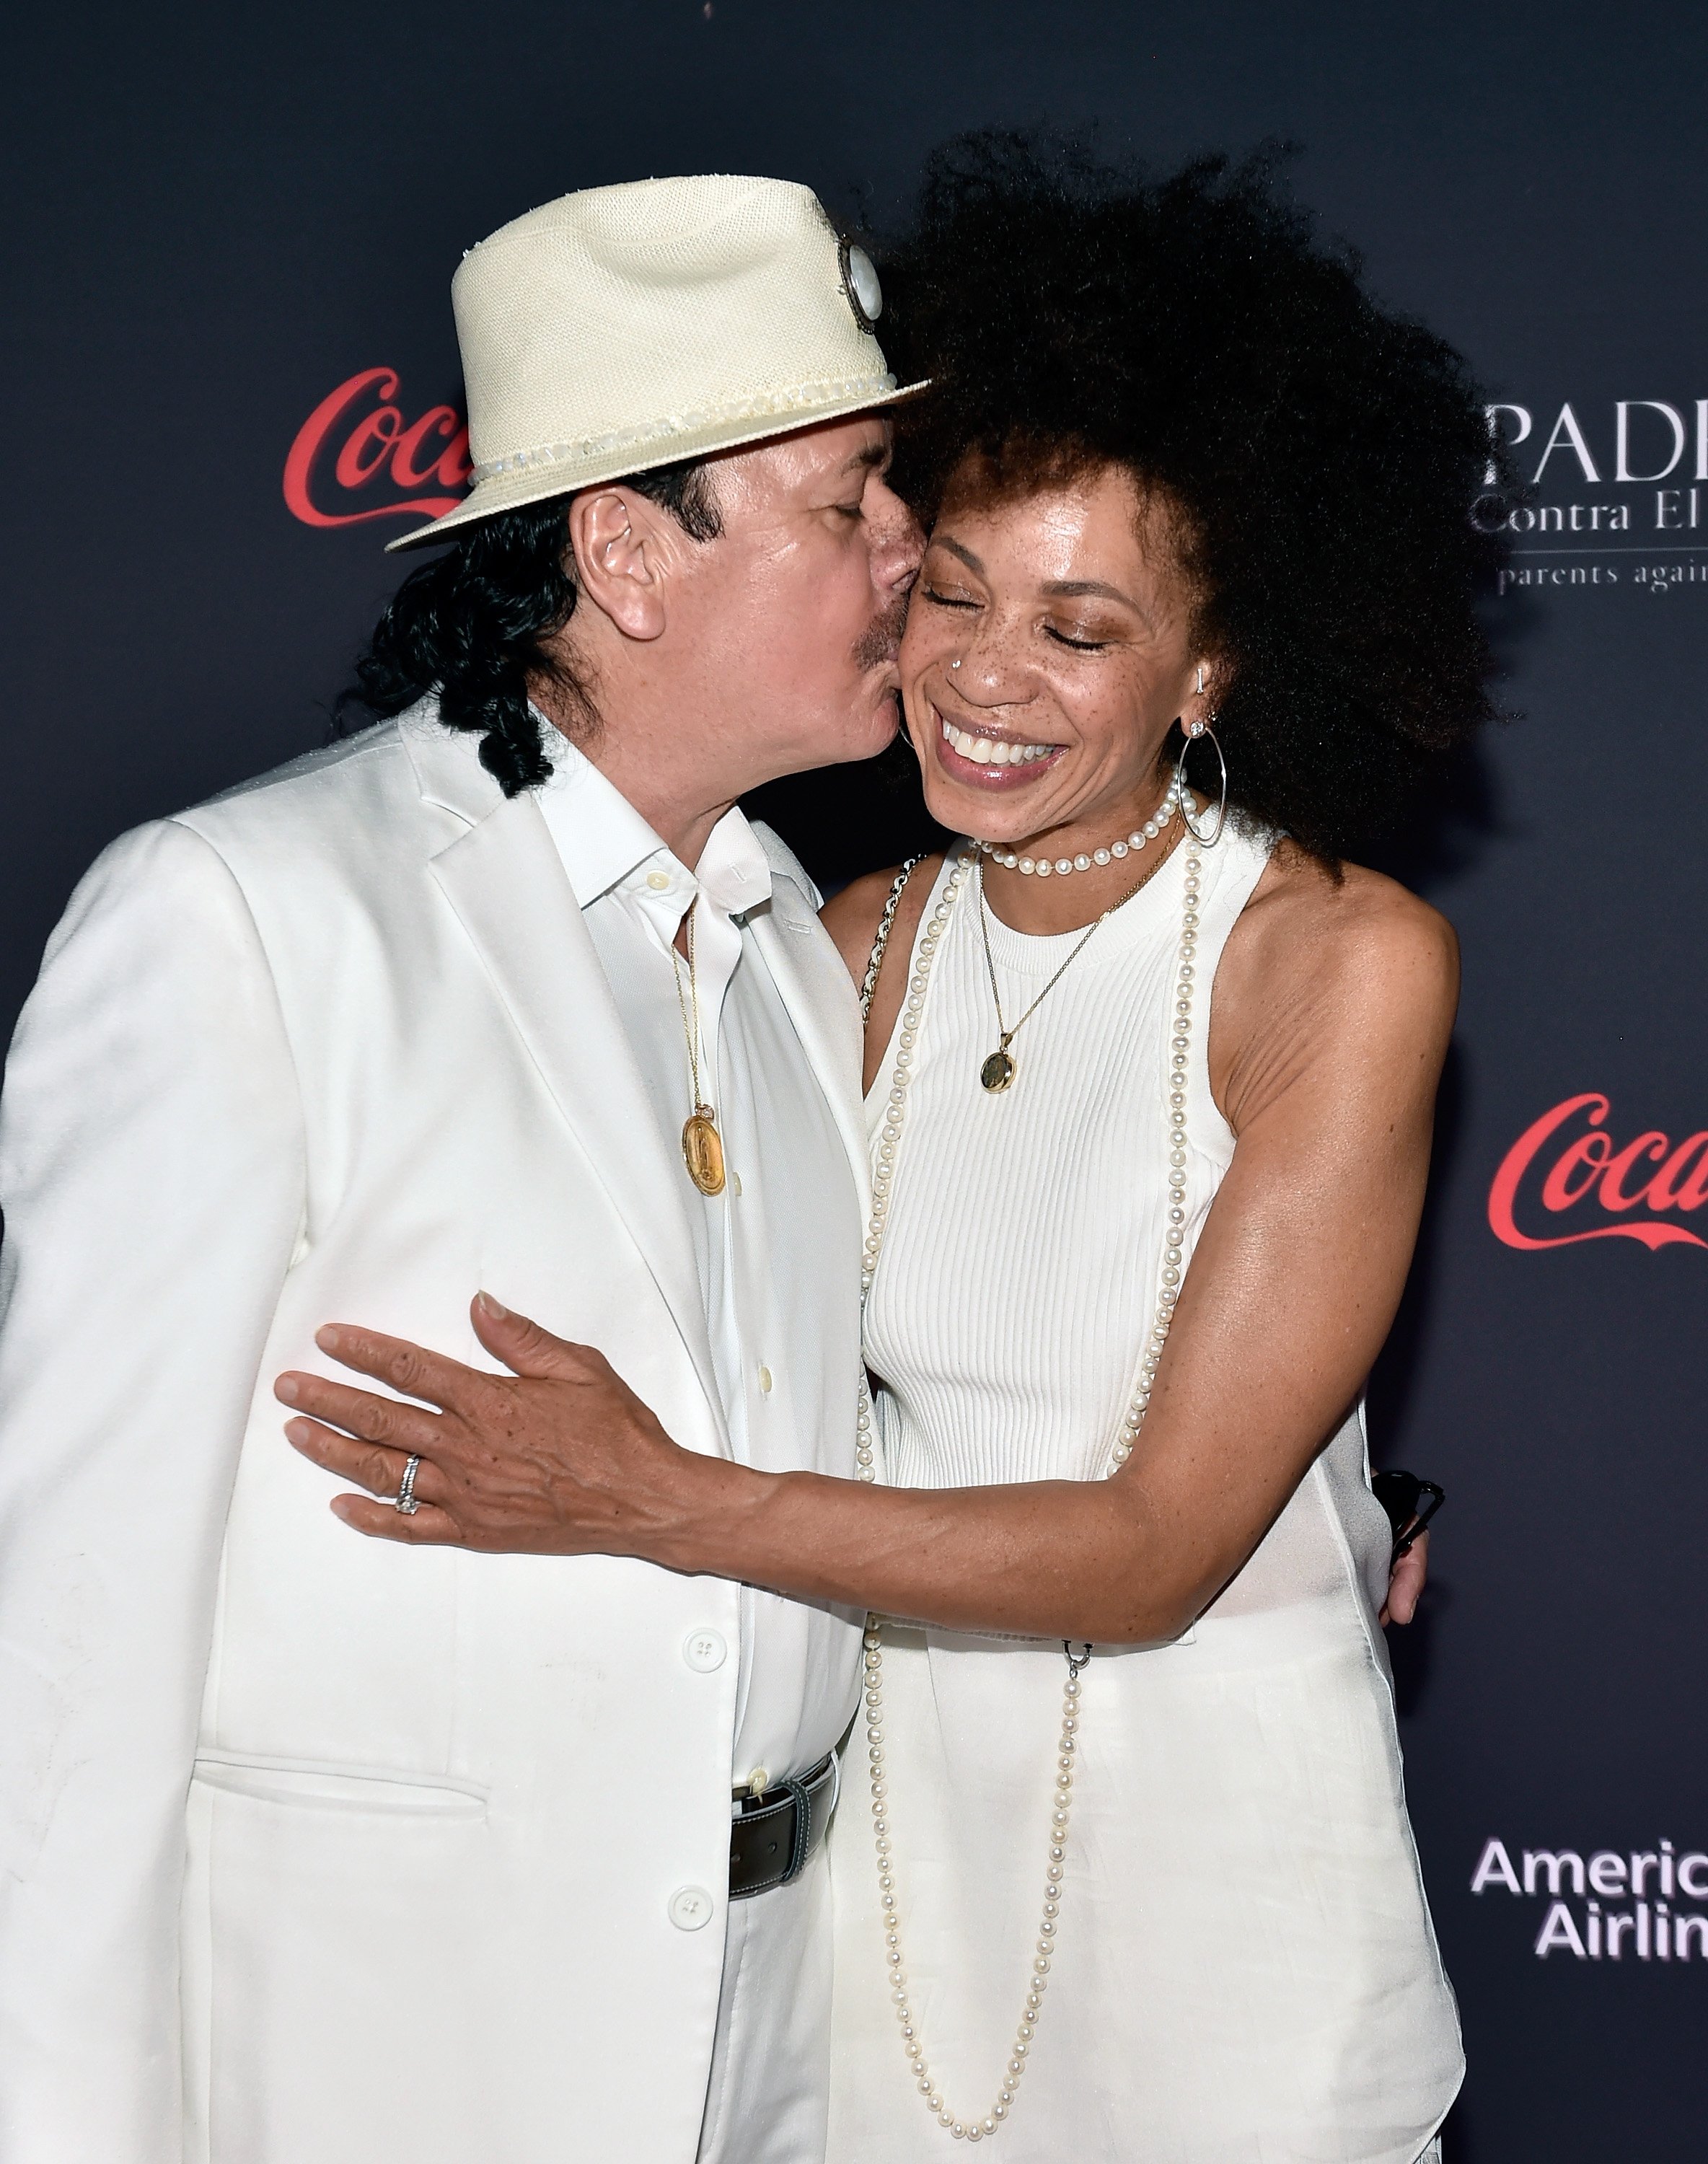 Carlos Santana and Cindy Blackman in Las Vegas 2014. | Source: Getty Images